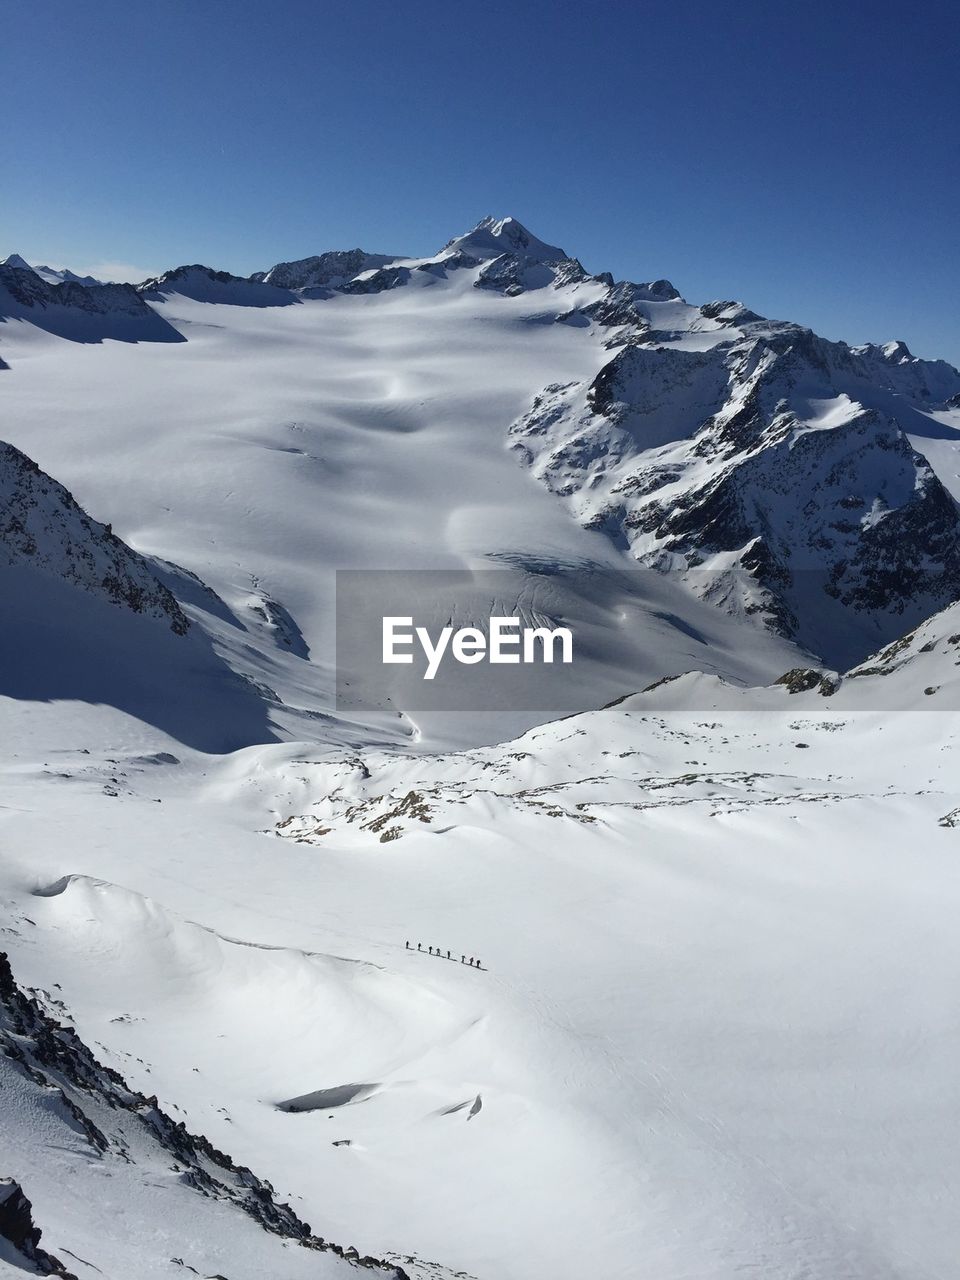 Climbers crossing an alpine glacier